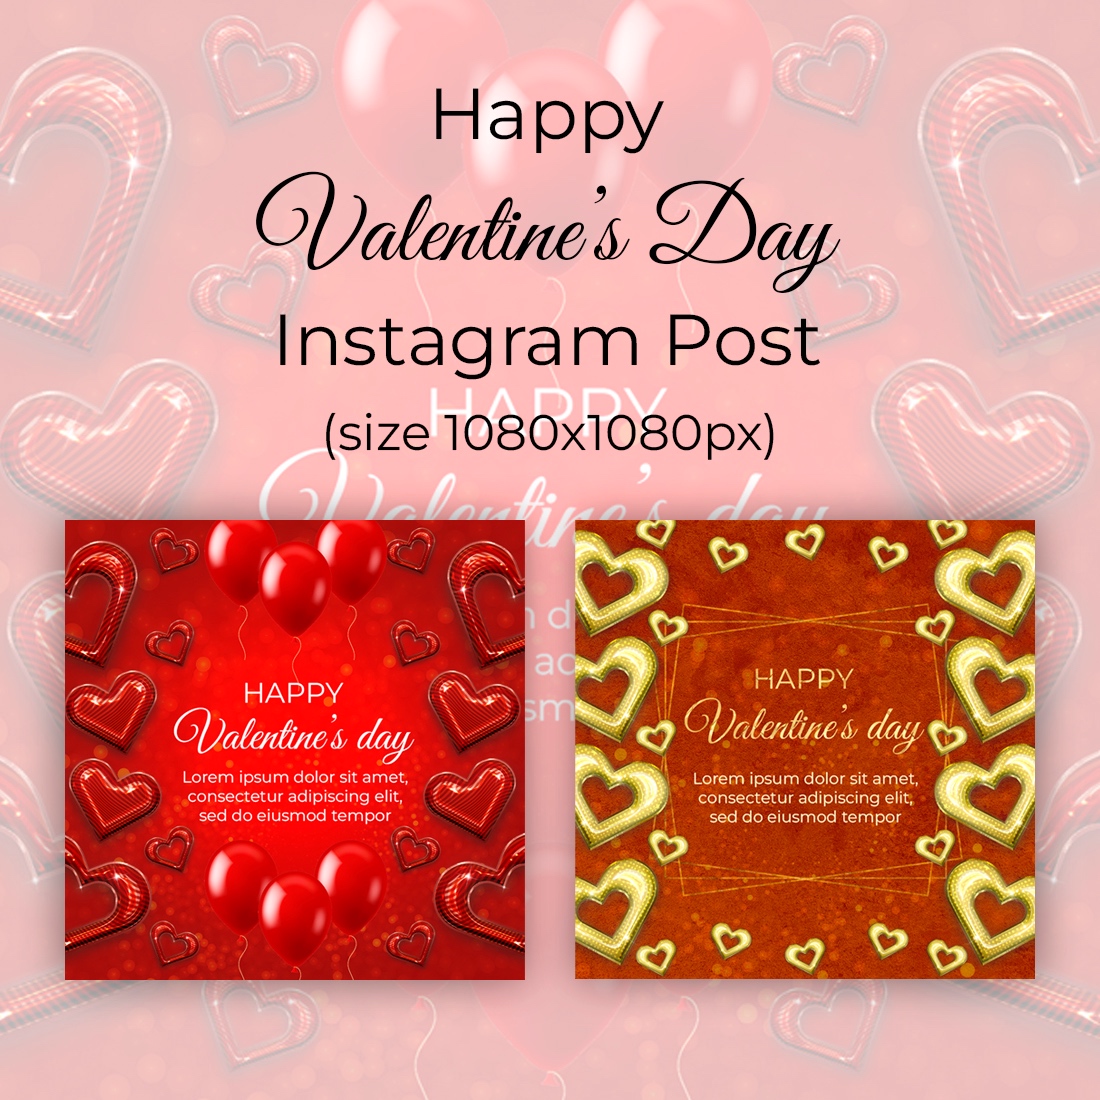 Happy Valentine's Day Instagram Post Design.